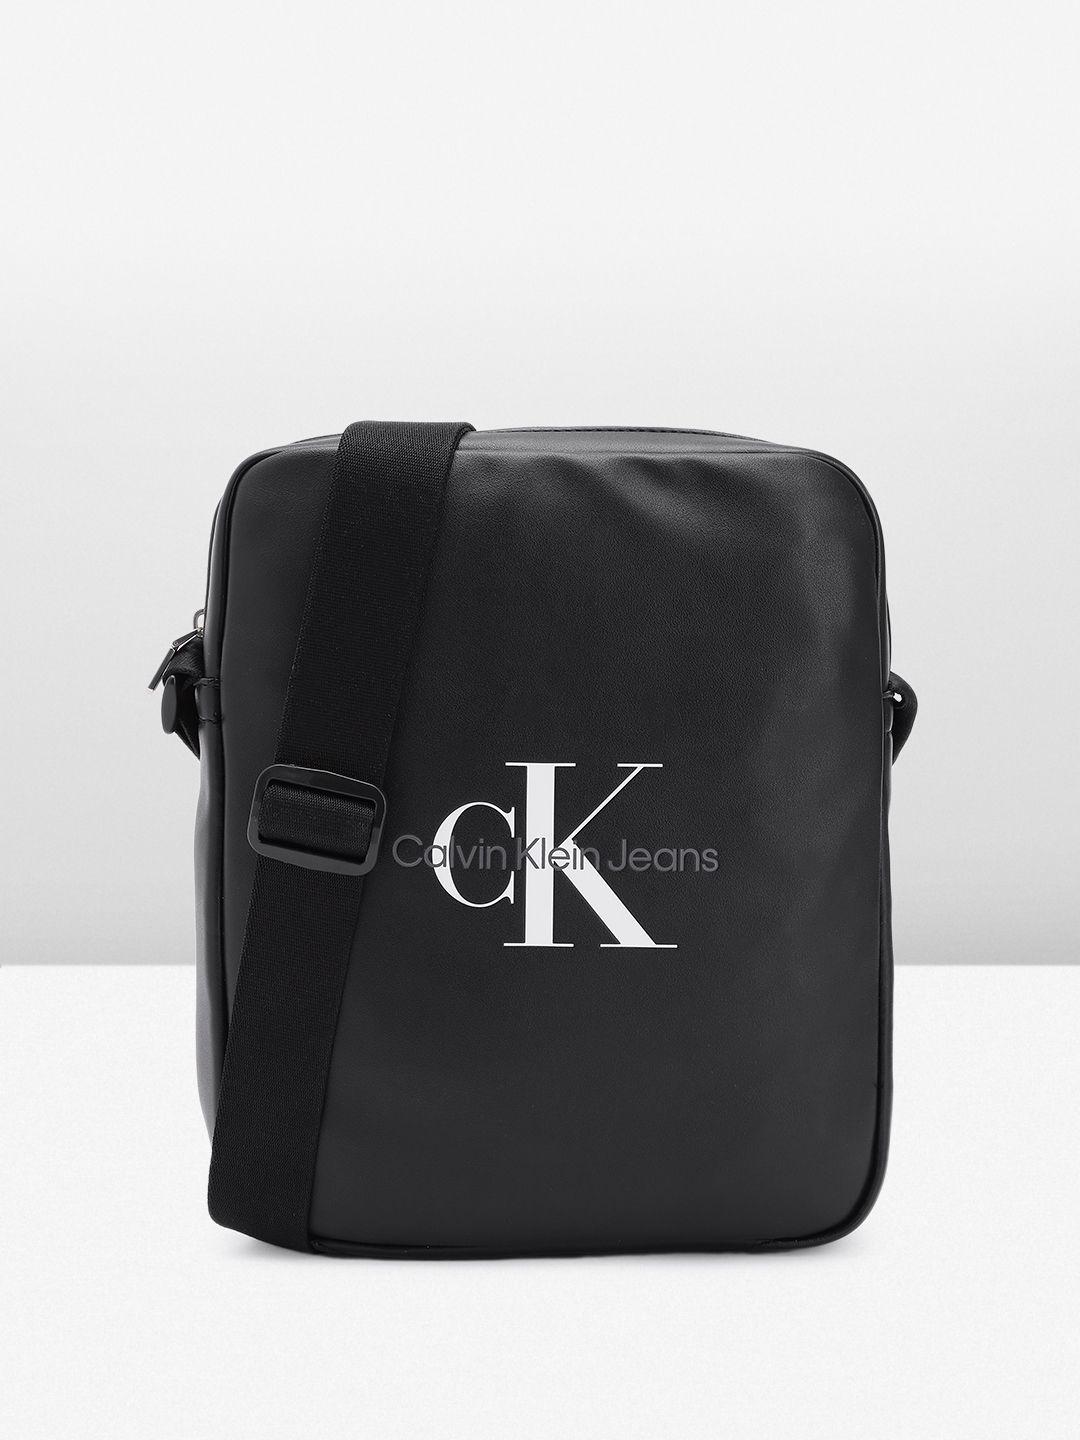 calvin klein men brand logo printed messenger bag